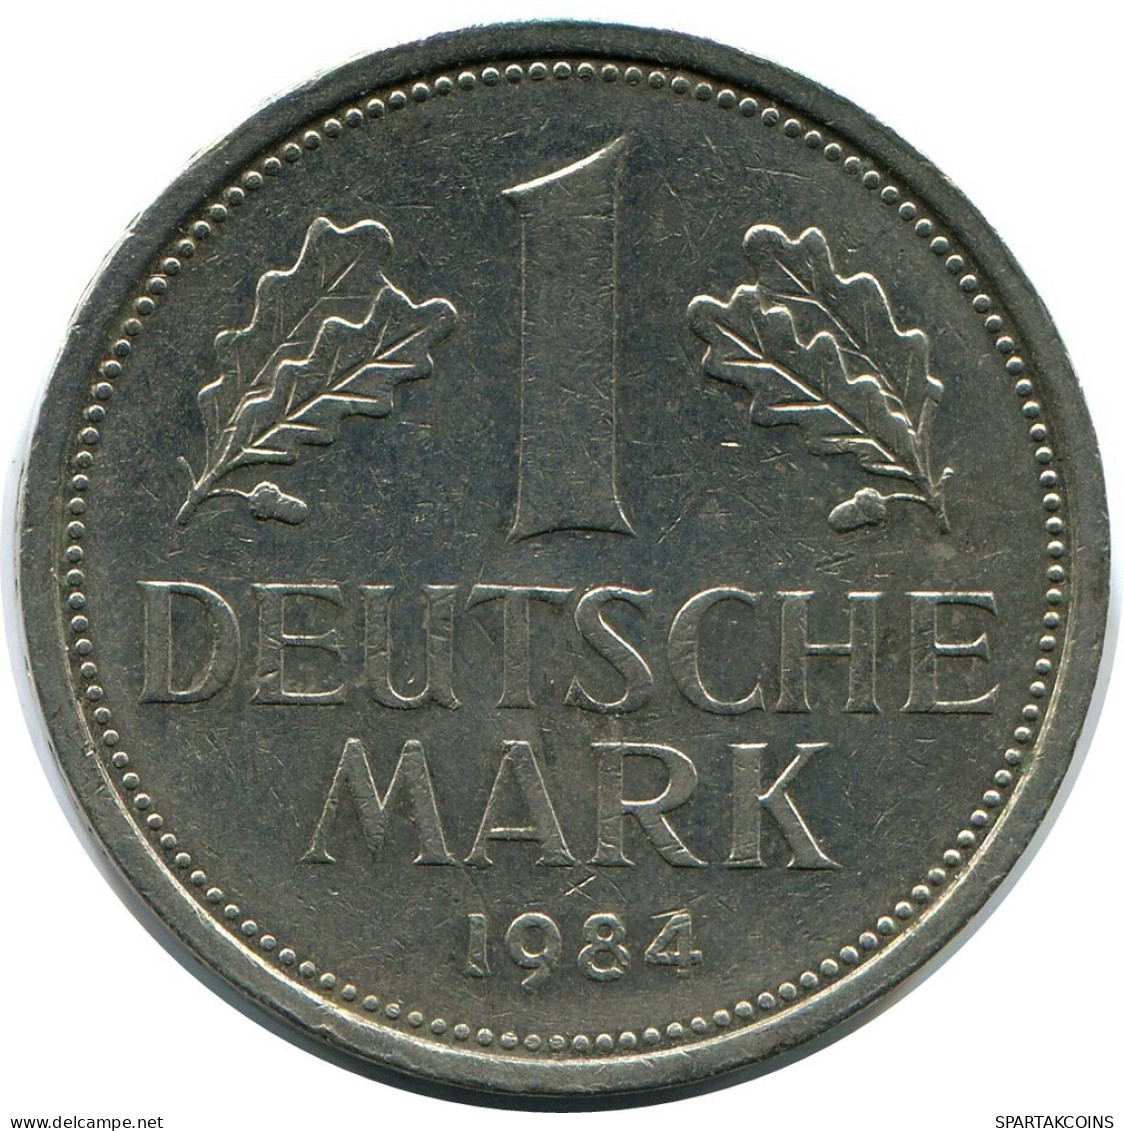 1 DM 1984 D WEST & UNIFIED GERMANY Coin #AZ445.U.A - 1 Marco